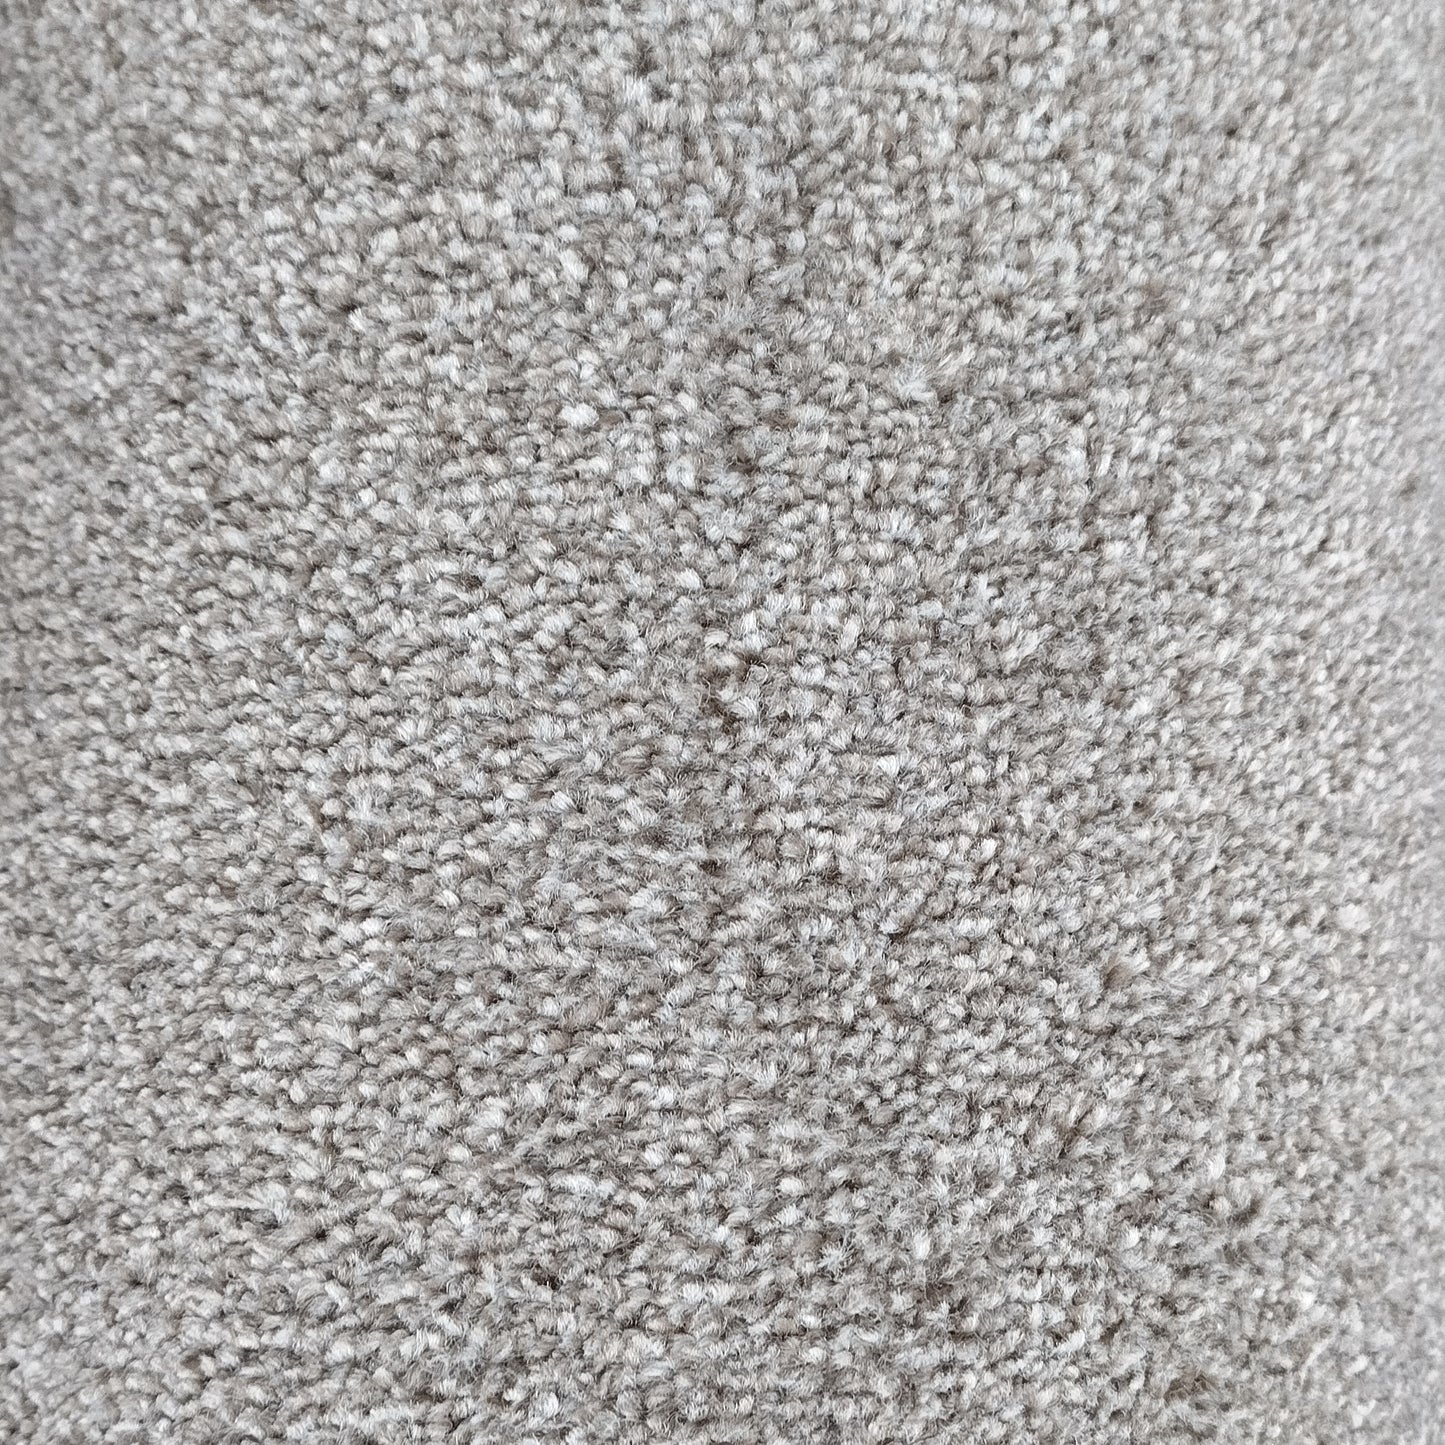 Fairway Dark Hessian 2.45 x 4 m Roll End Carpet